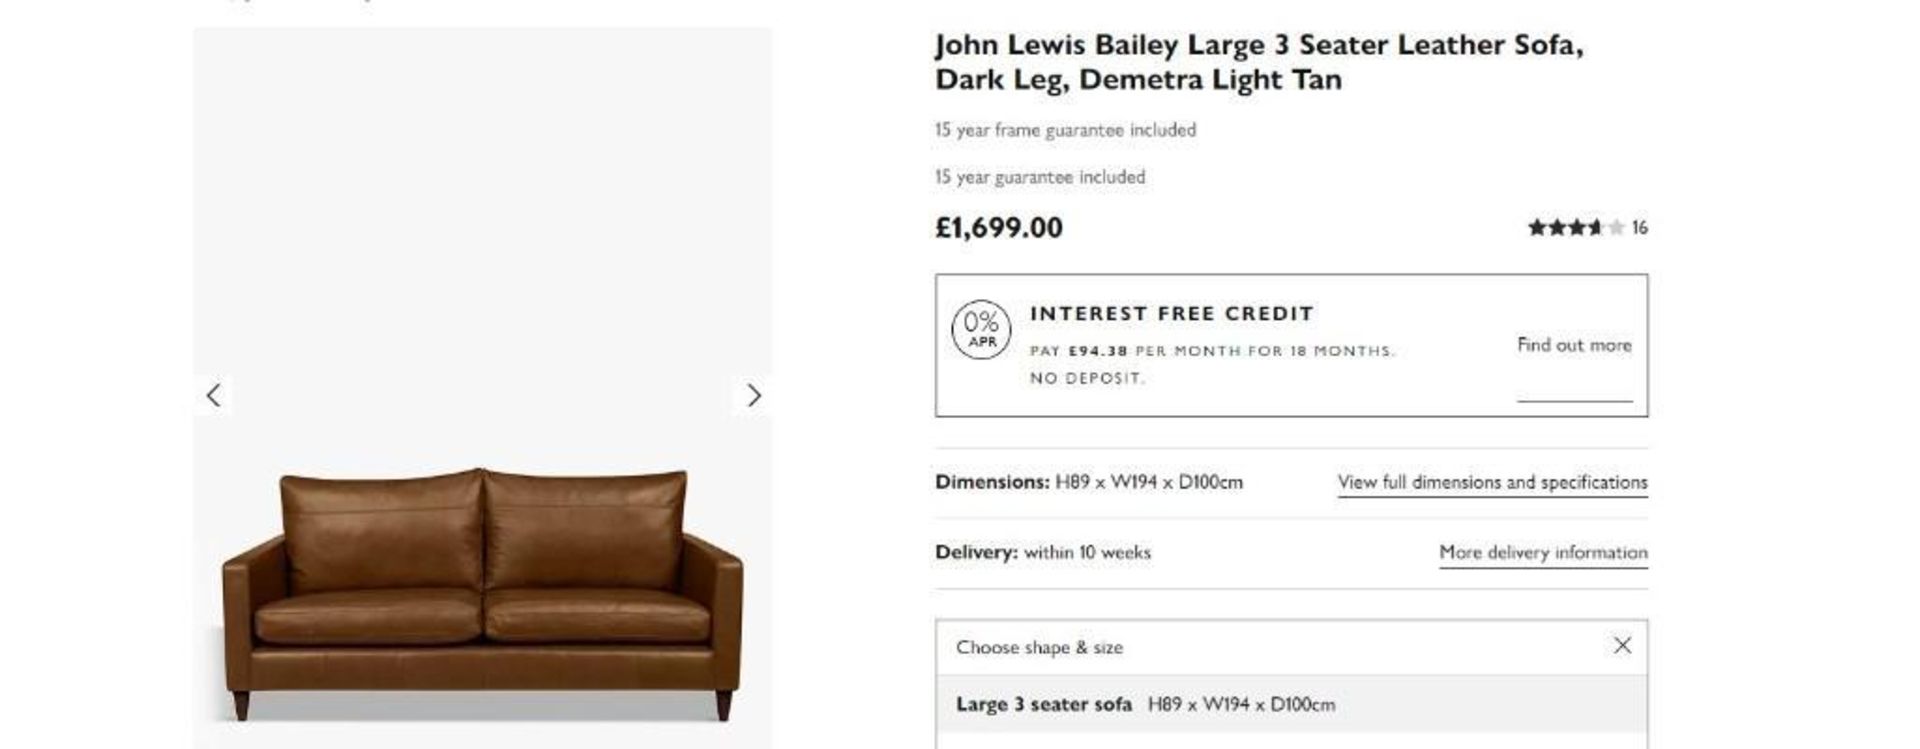 BRAND NEW John Lewis Bailey full leather 3 seater sofa in Tan. RRP: £1,699.00 - Bild 4 aus 4